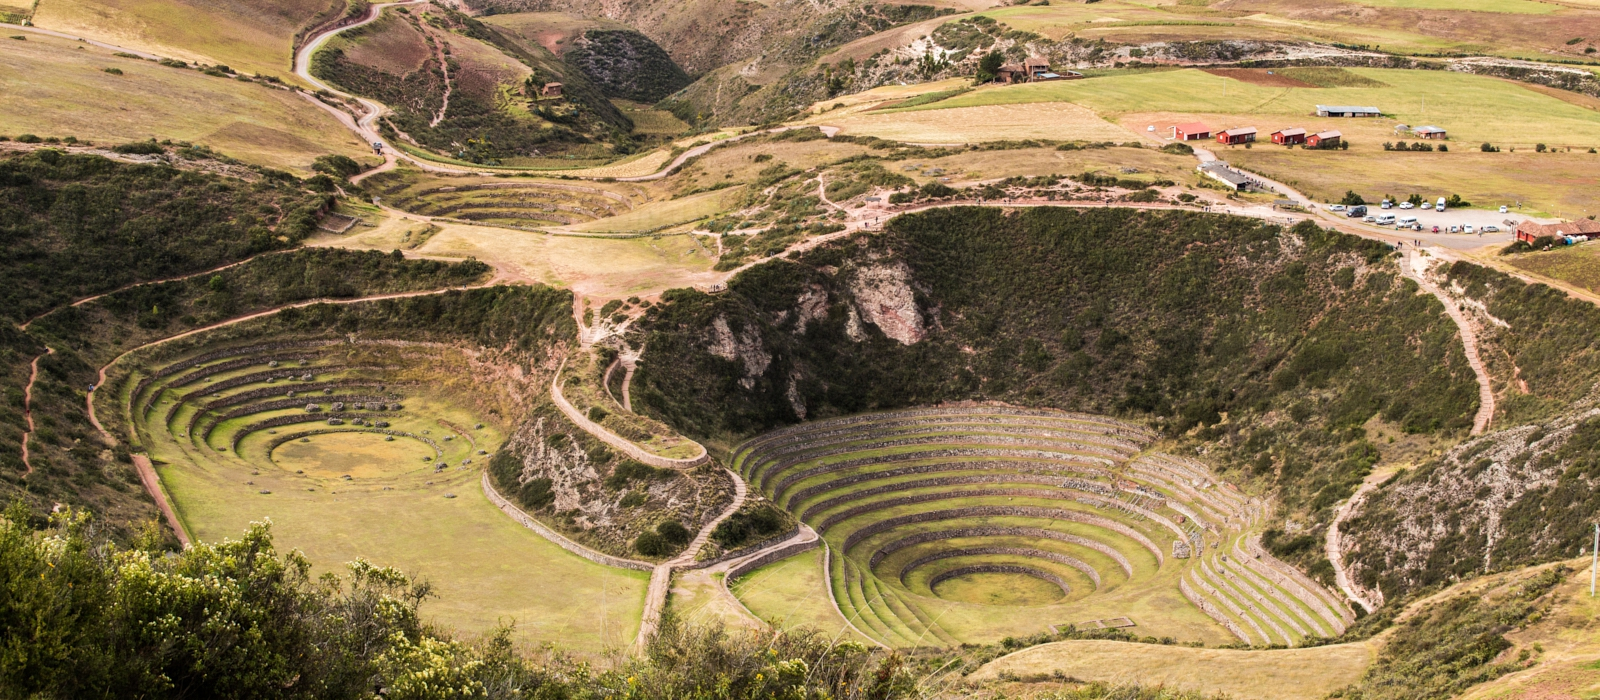 12 Day – Luxury Travel Peru